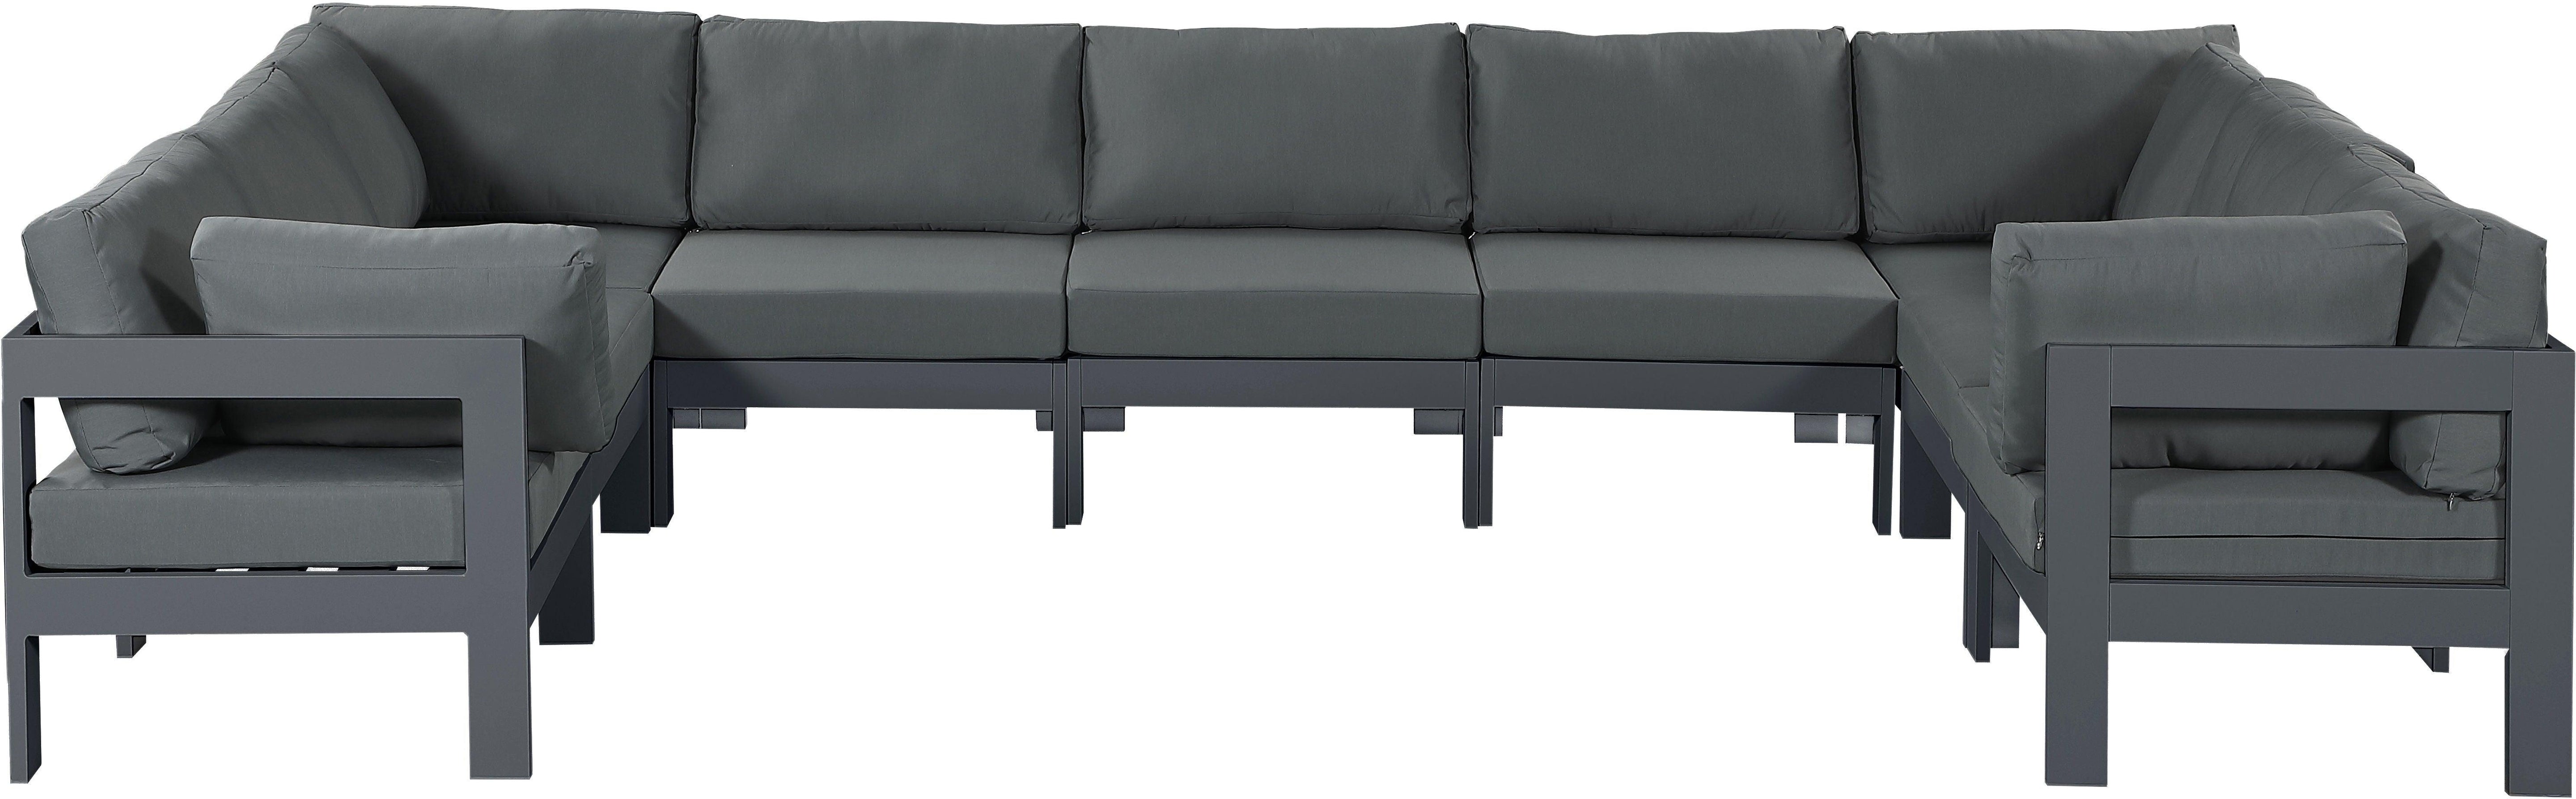 Meridian Furniture - Nizuc - Outdoor Patio Modular Sectional 9 Piece - Grey - 5th Avenue Furniture